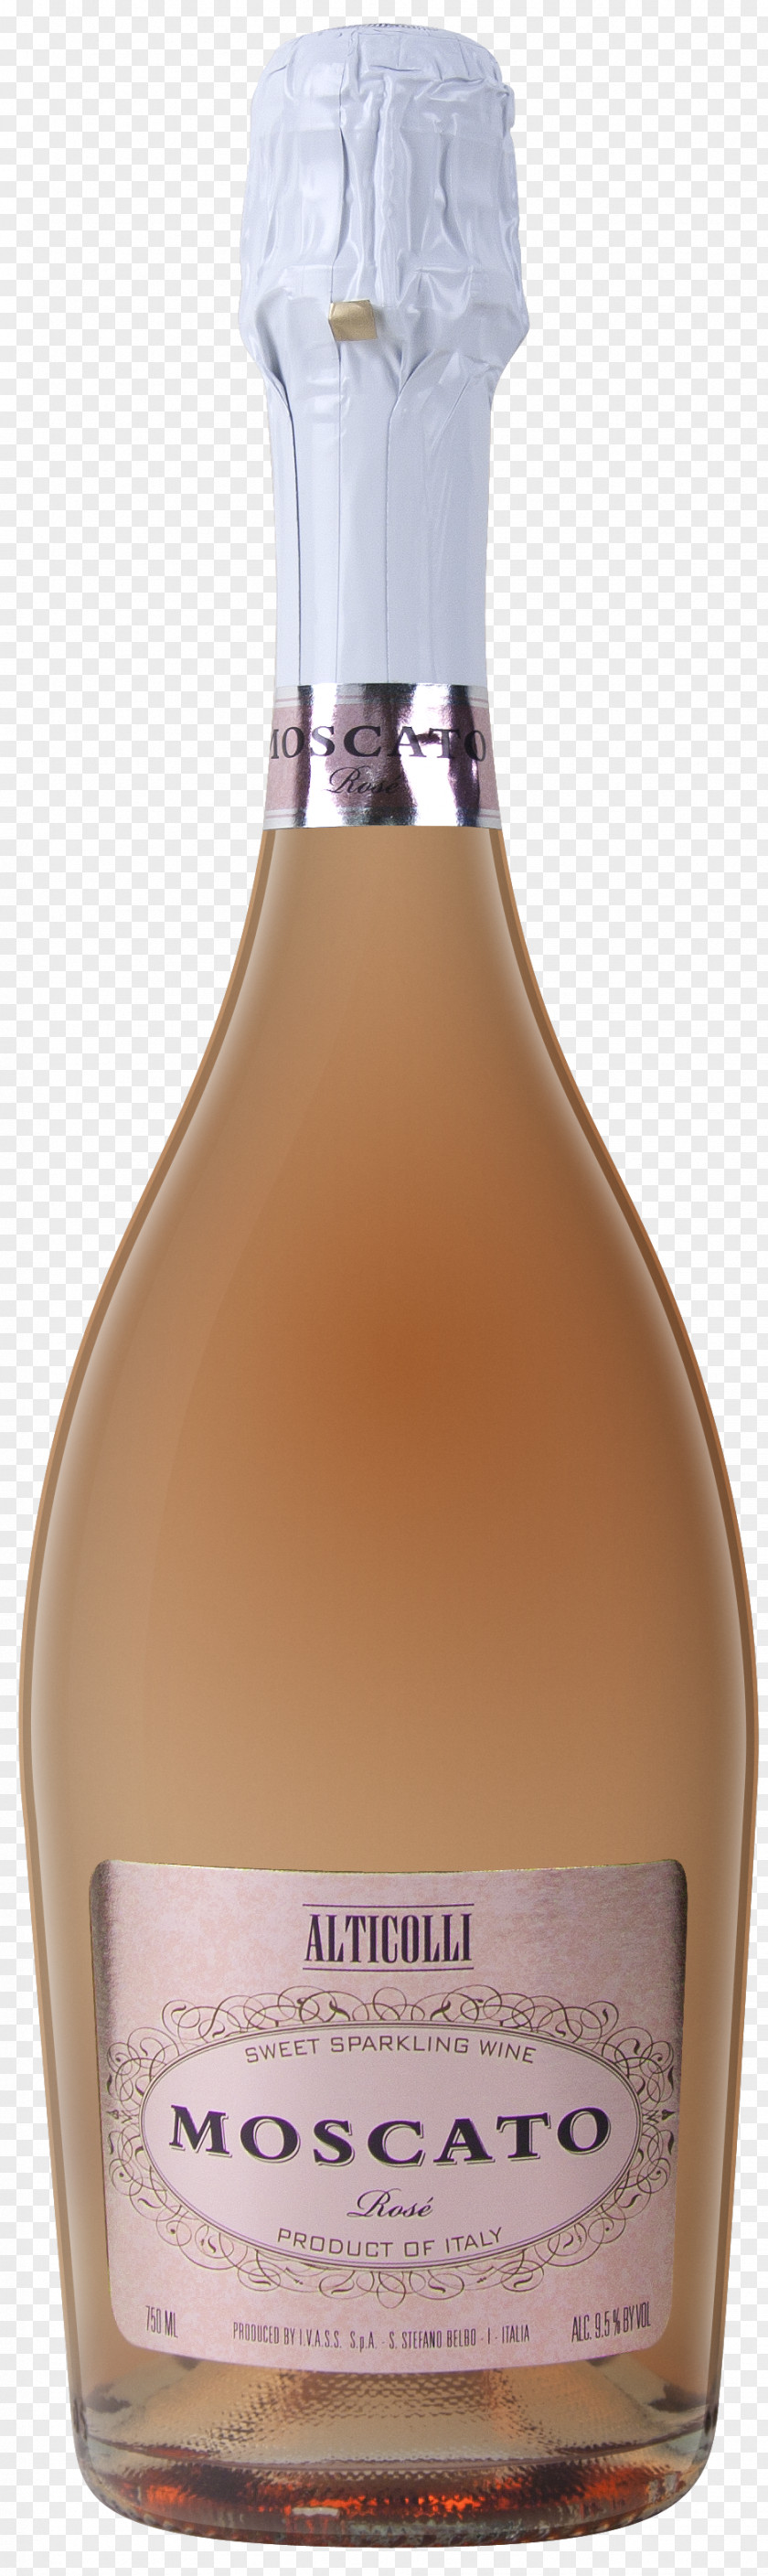 Wine Rose Liqueur Champagne PNG